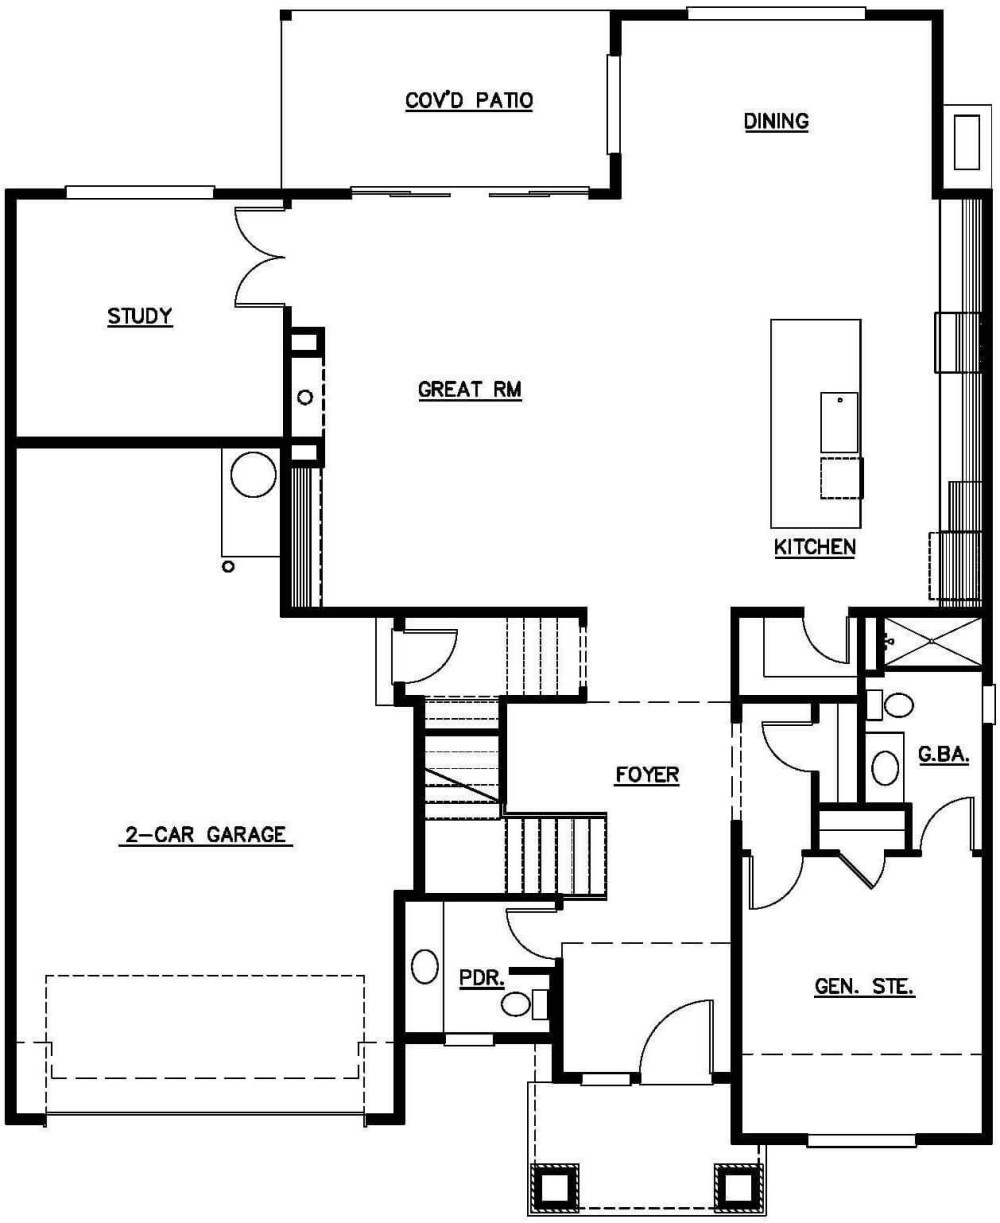 Main Floor Plan floorplan for the Milford - Lot 5 home